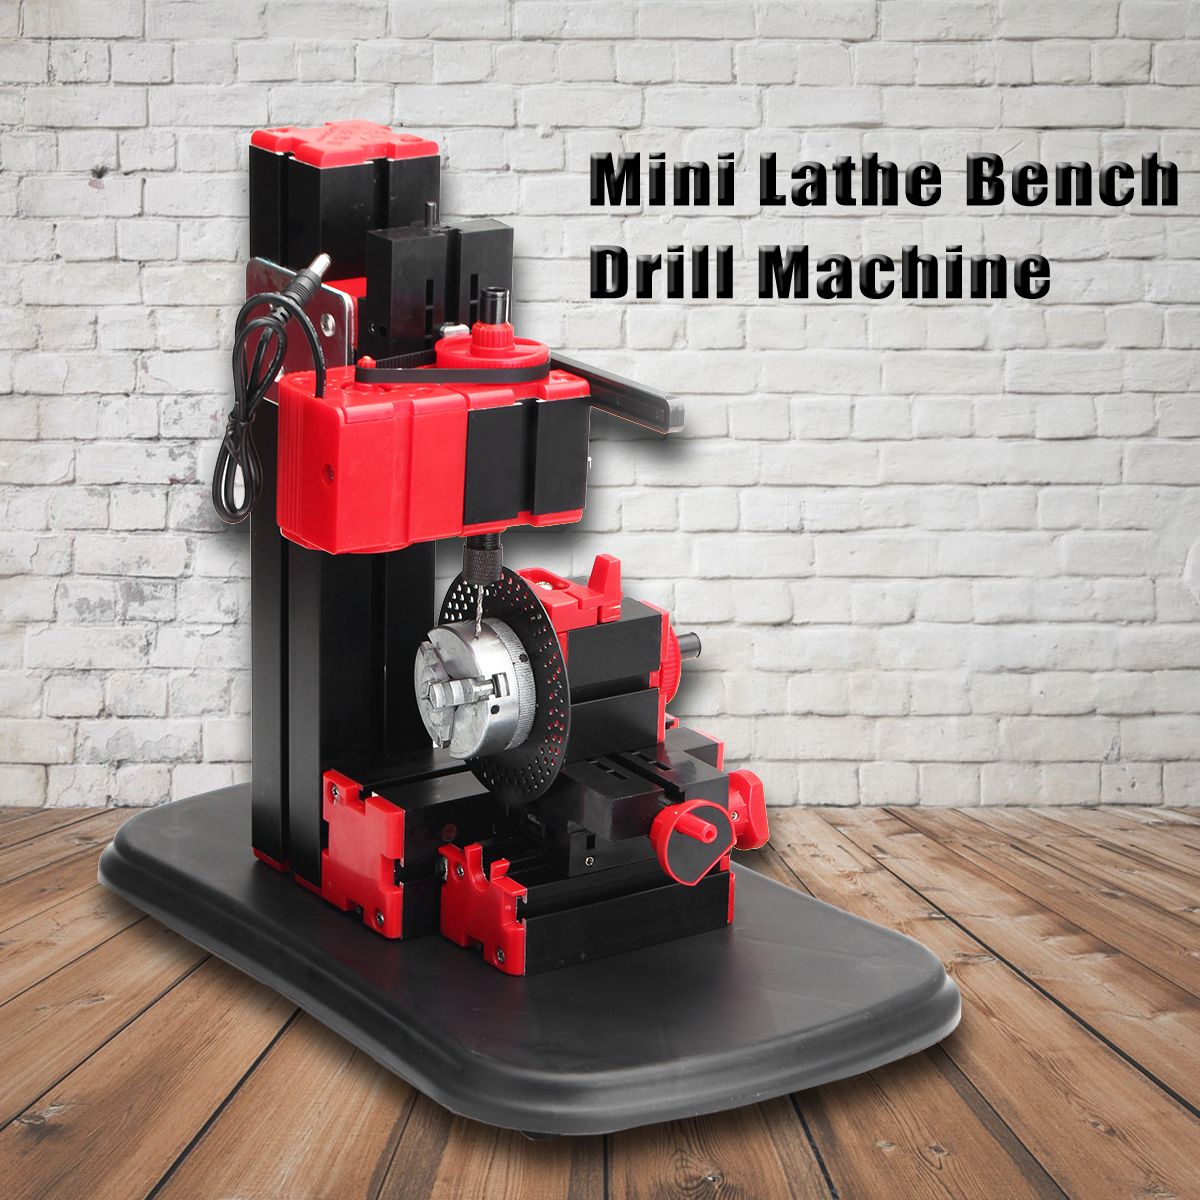 Mini-Lathe-Bench-Drill-Machine-DIY-Woodwork-Model-Making-Tool-Lathe-Milling-Machine-Kit-1288141